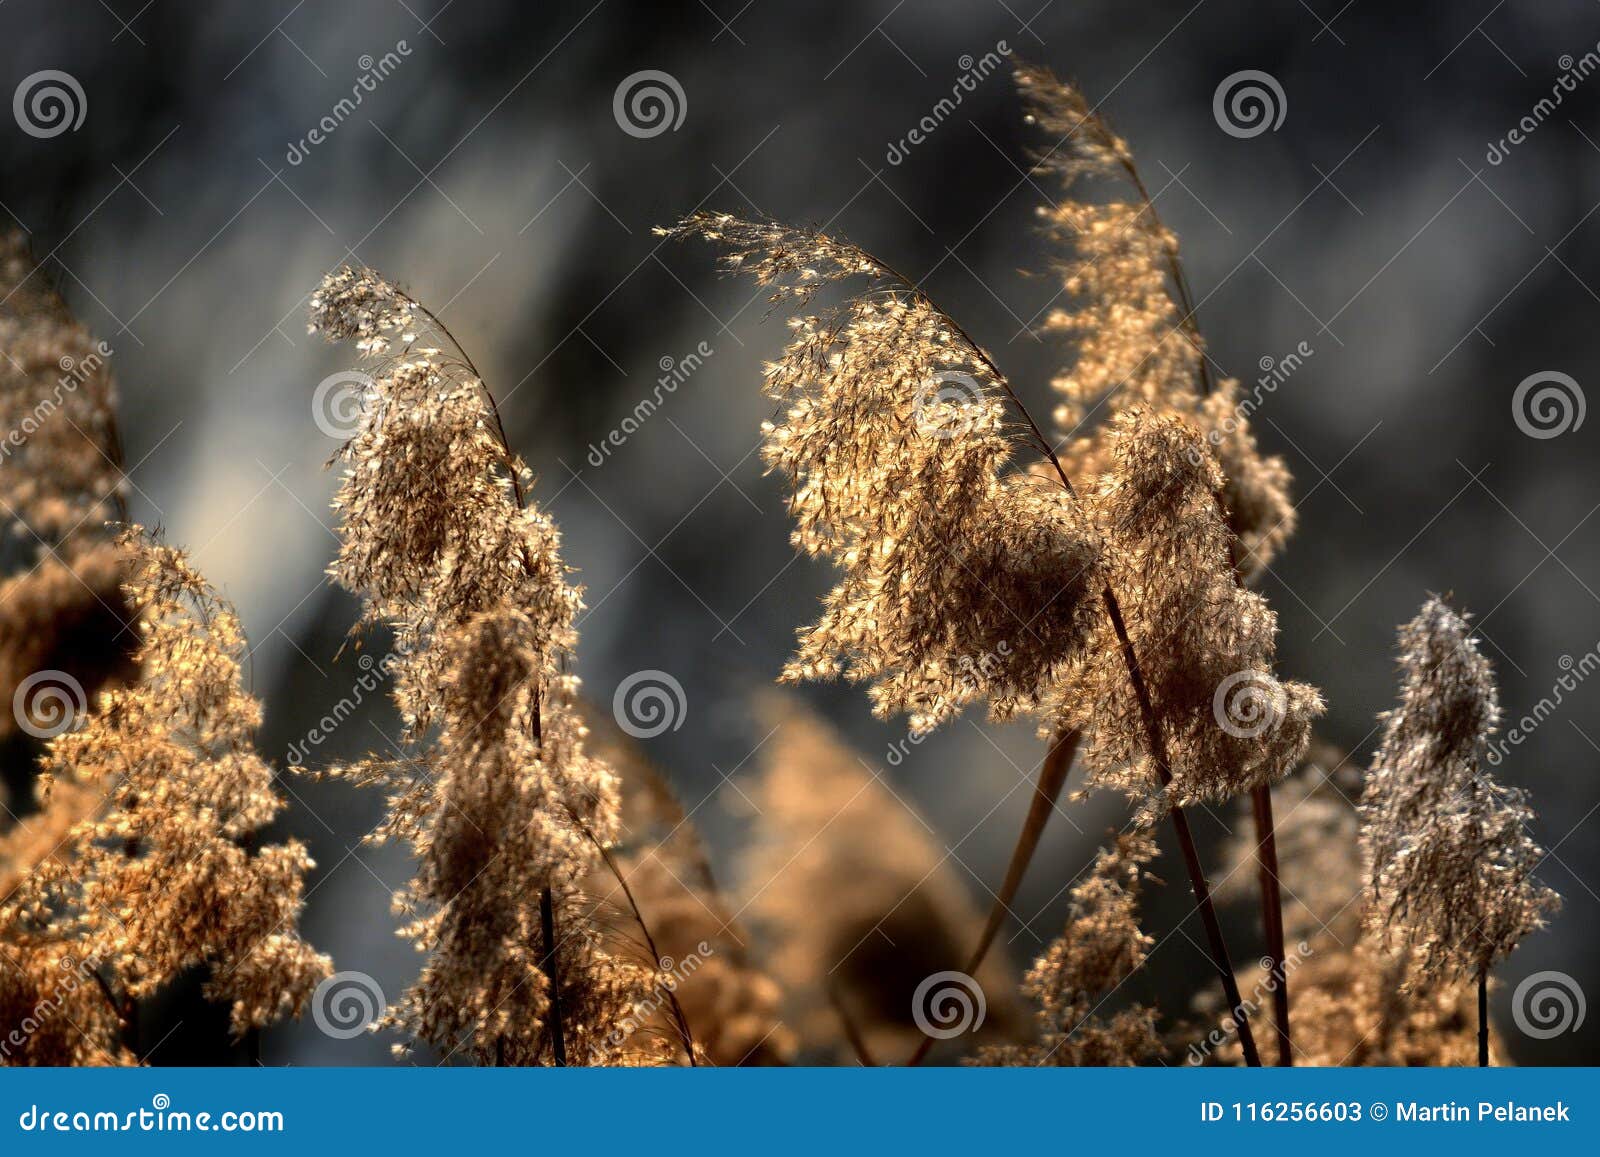 Halms of reed stock image. Image of botanical, bright - 116256603